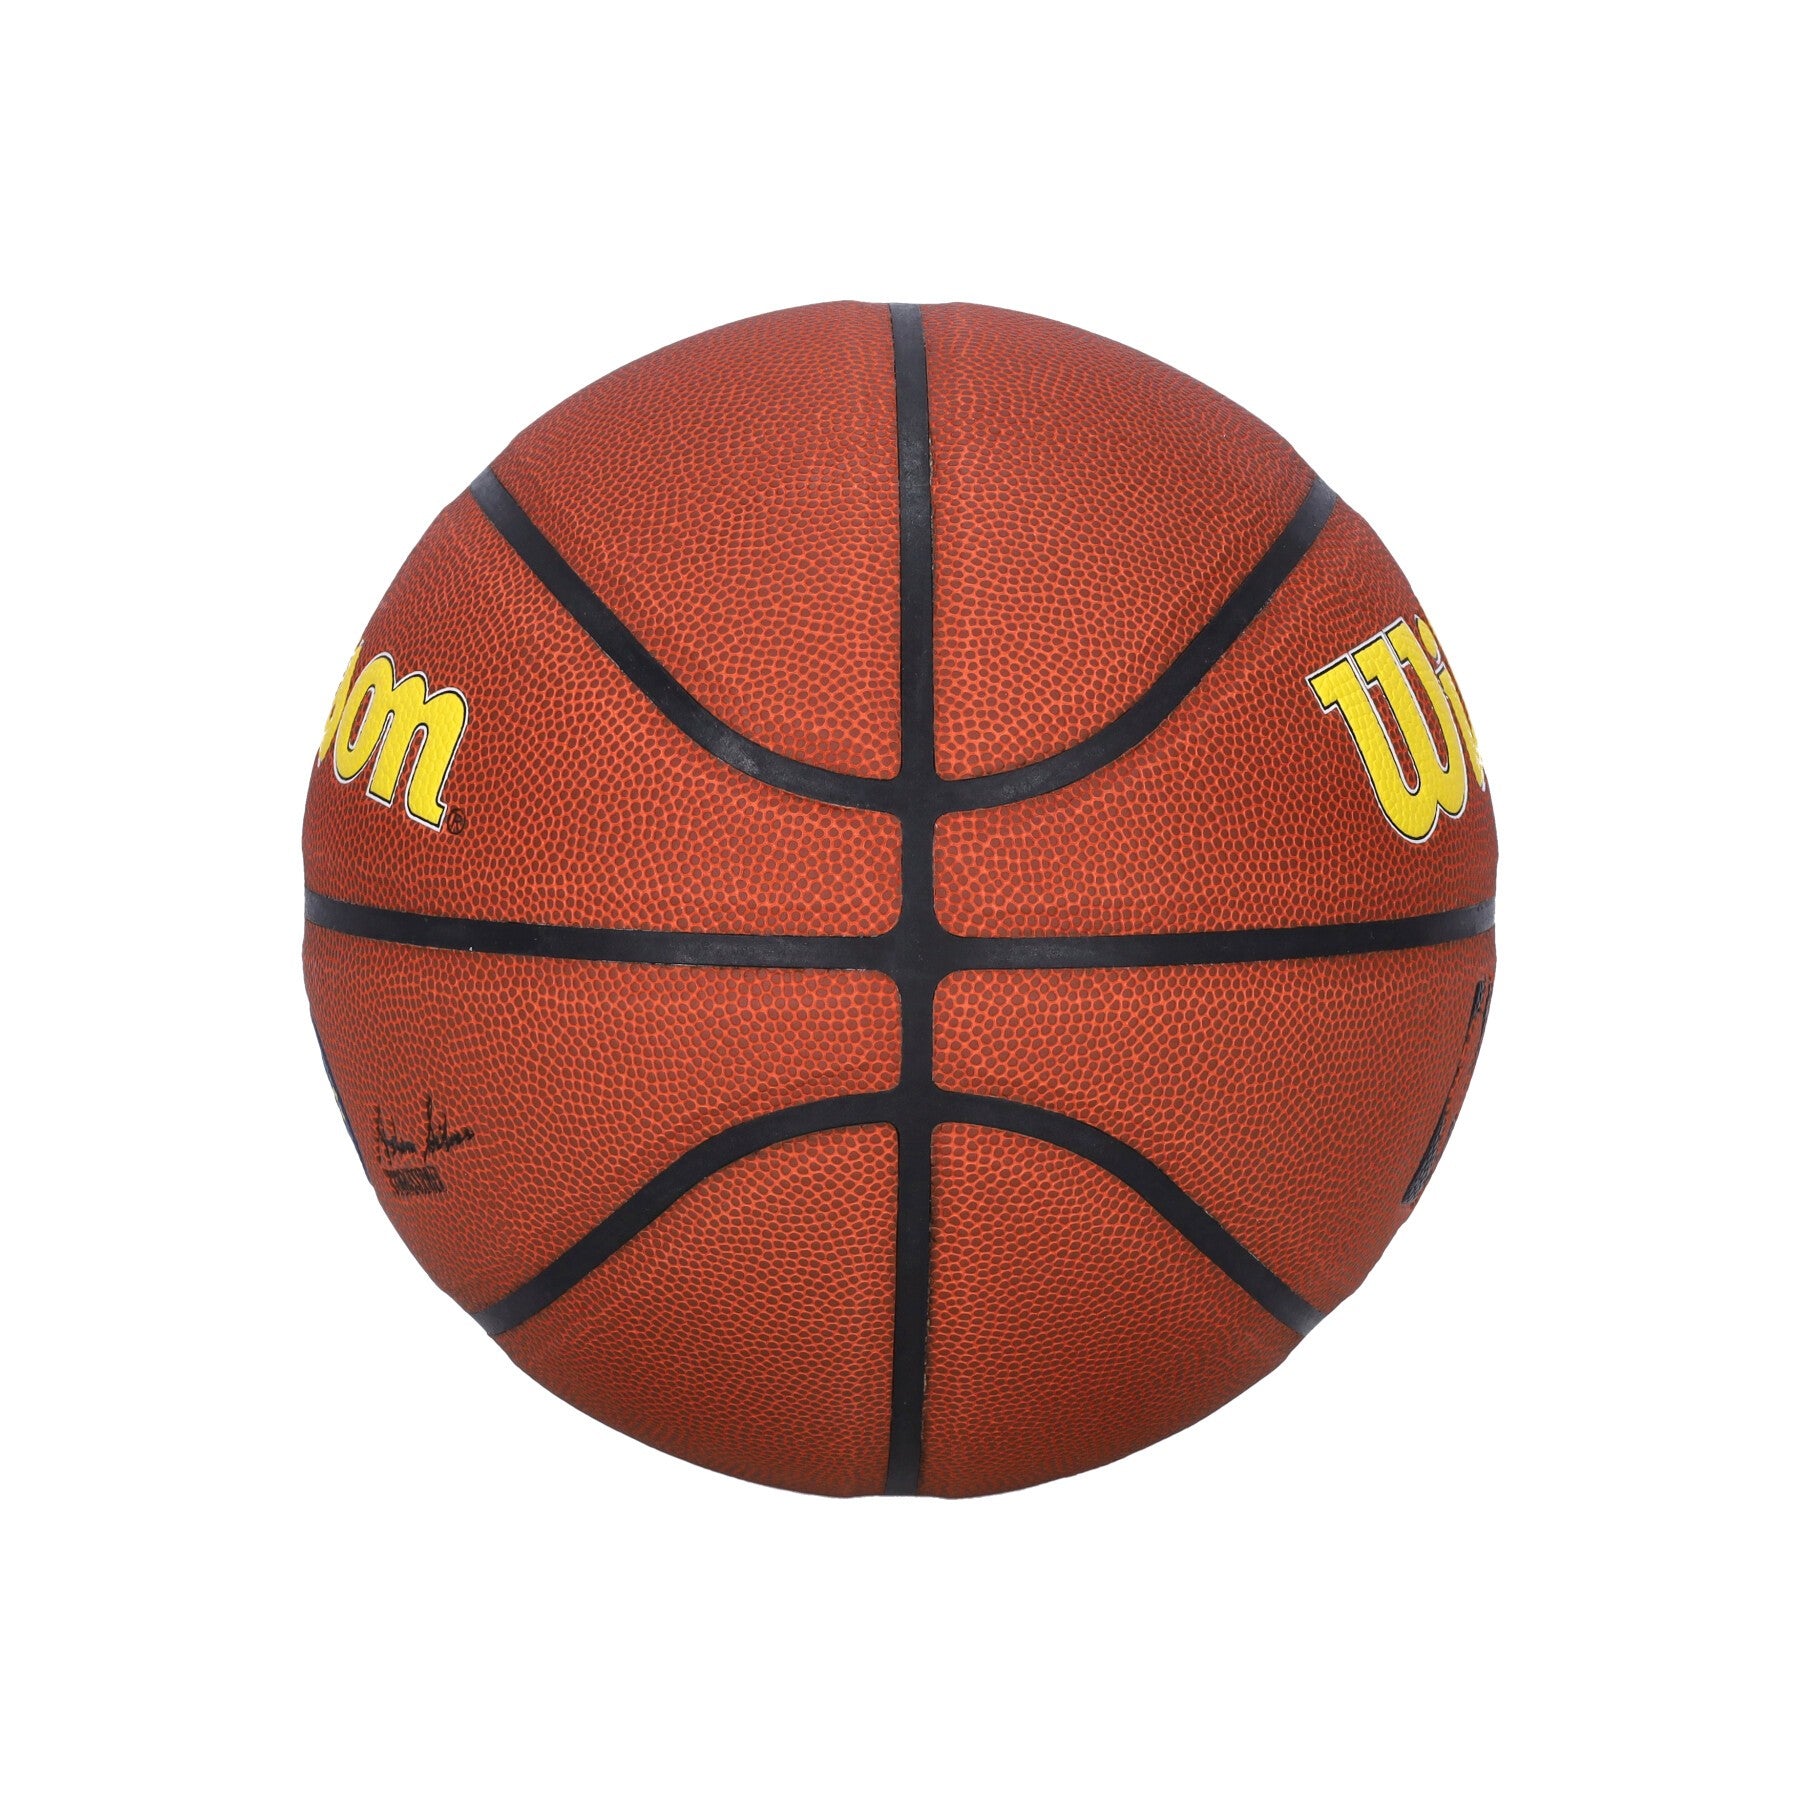 Pallone Uomo Nba Team Alliance Basketball Size 7 Indpac Original Team Colors